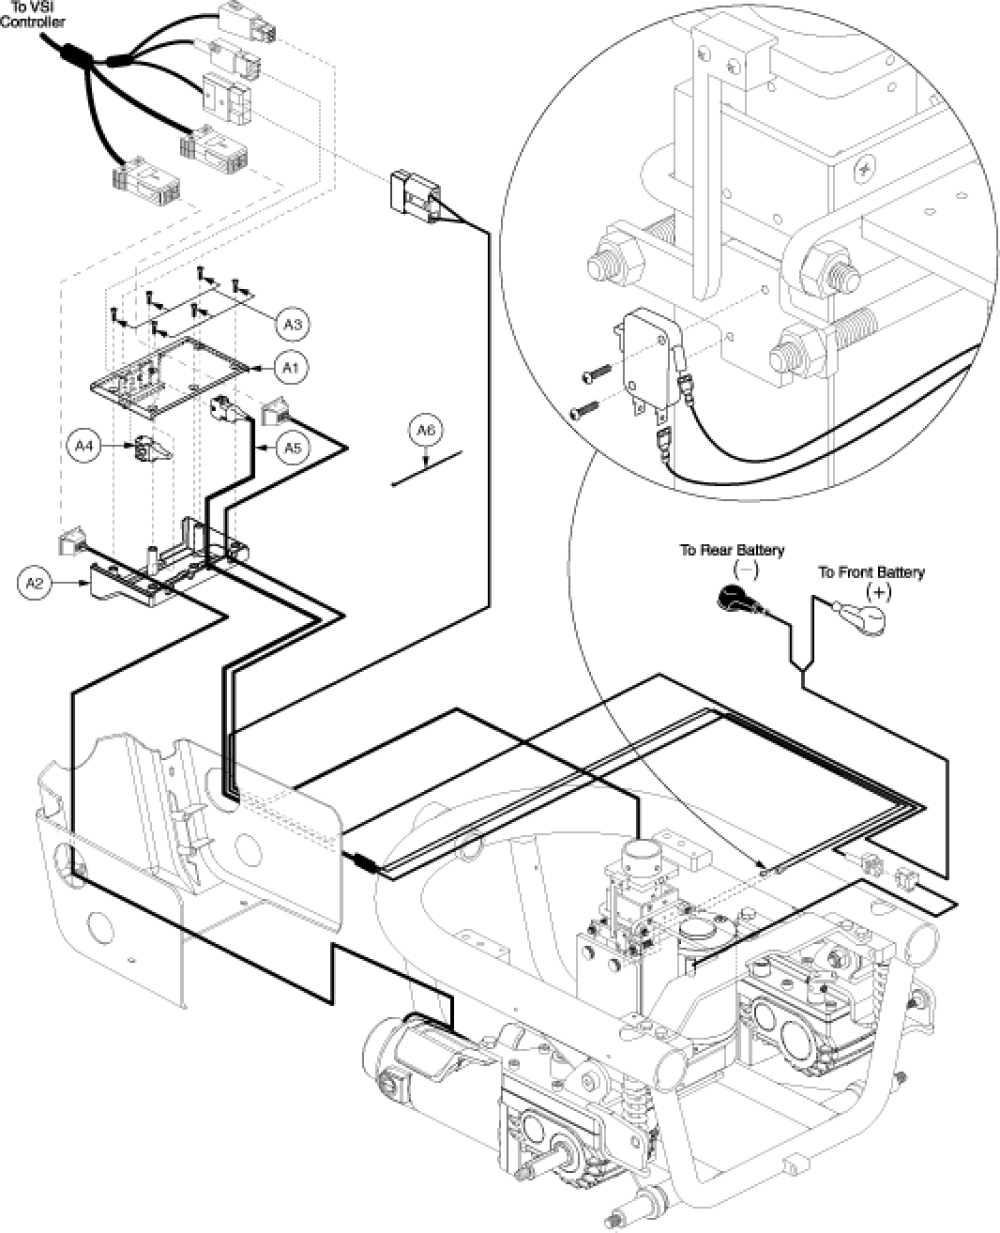 Electronics Tray Assembly - Vsi, Power Seat Thru Joystick parts diagram